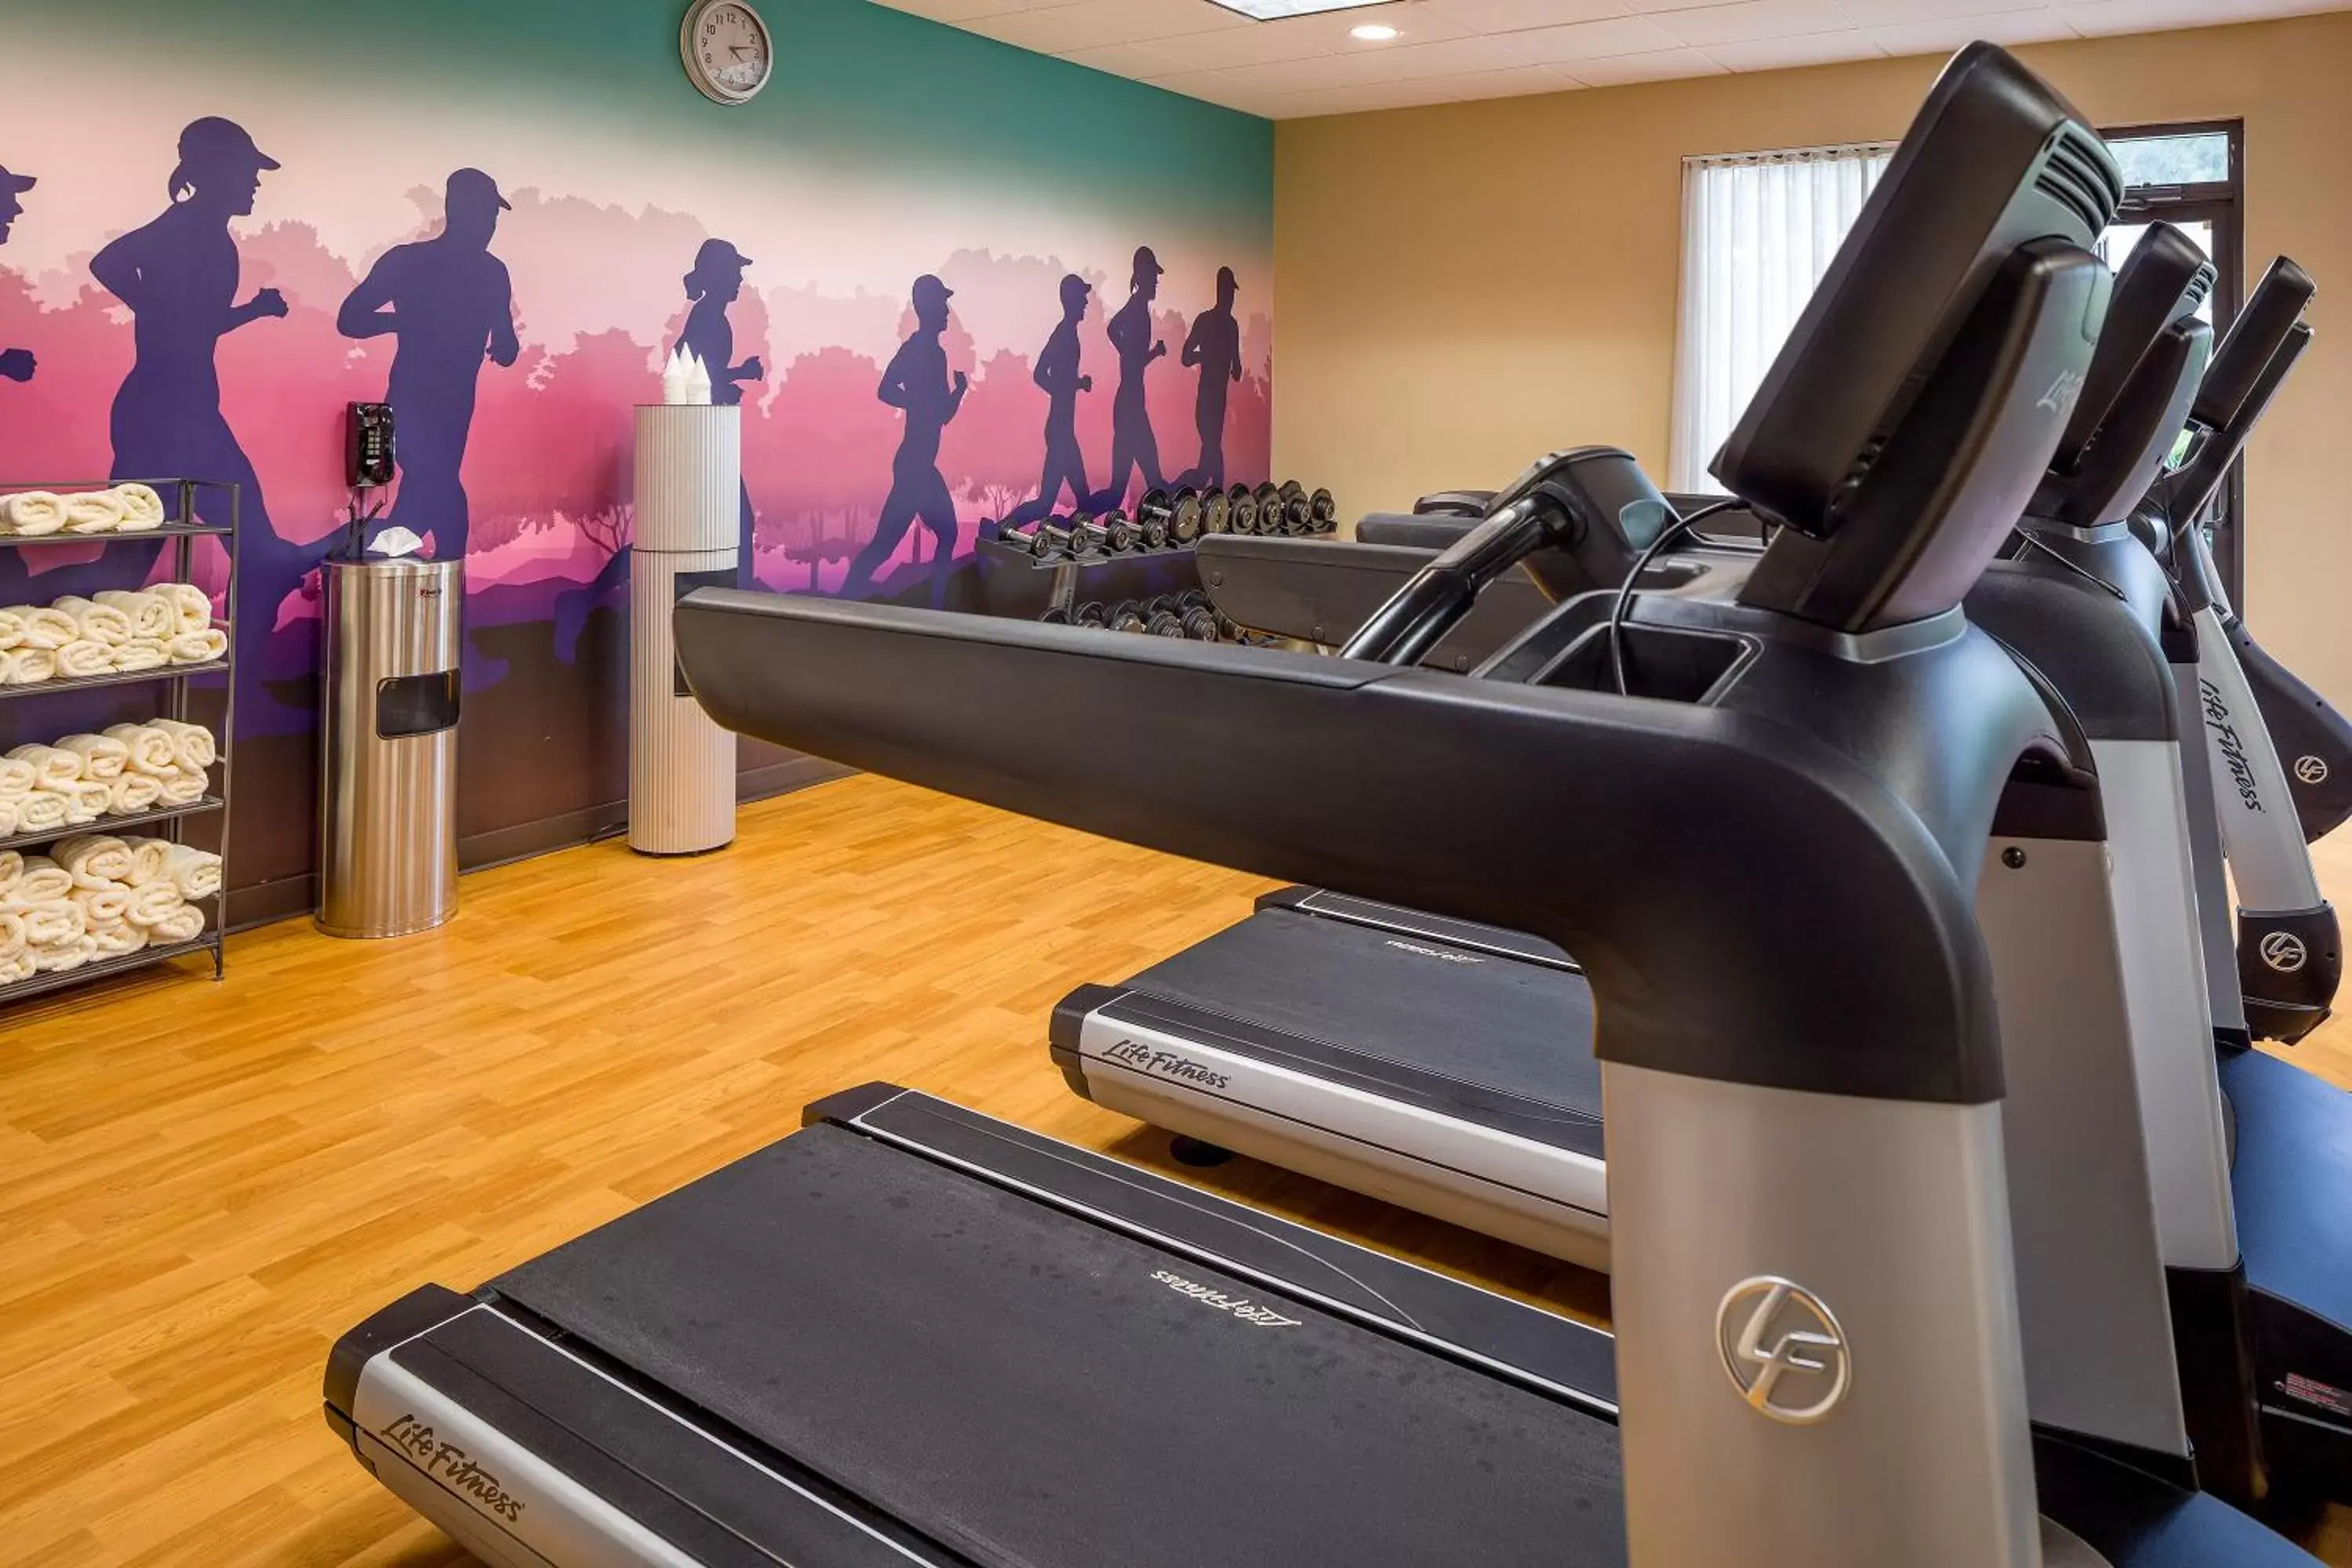 Fitness centre/facilities, Fitness Center/Facilities in Hyatt Place Houston-North